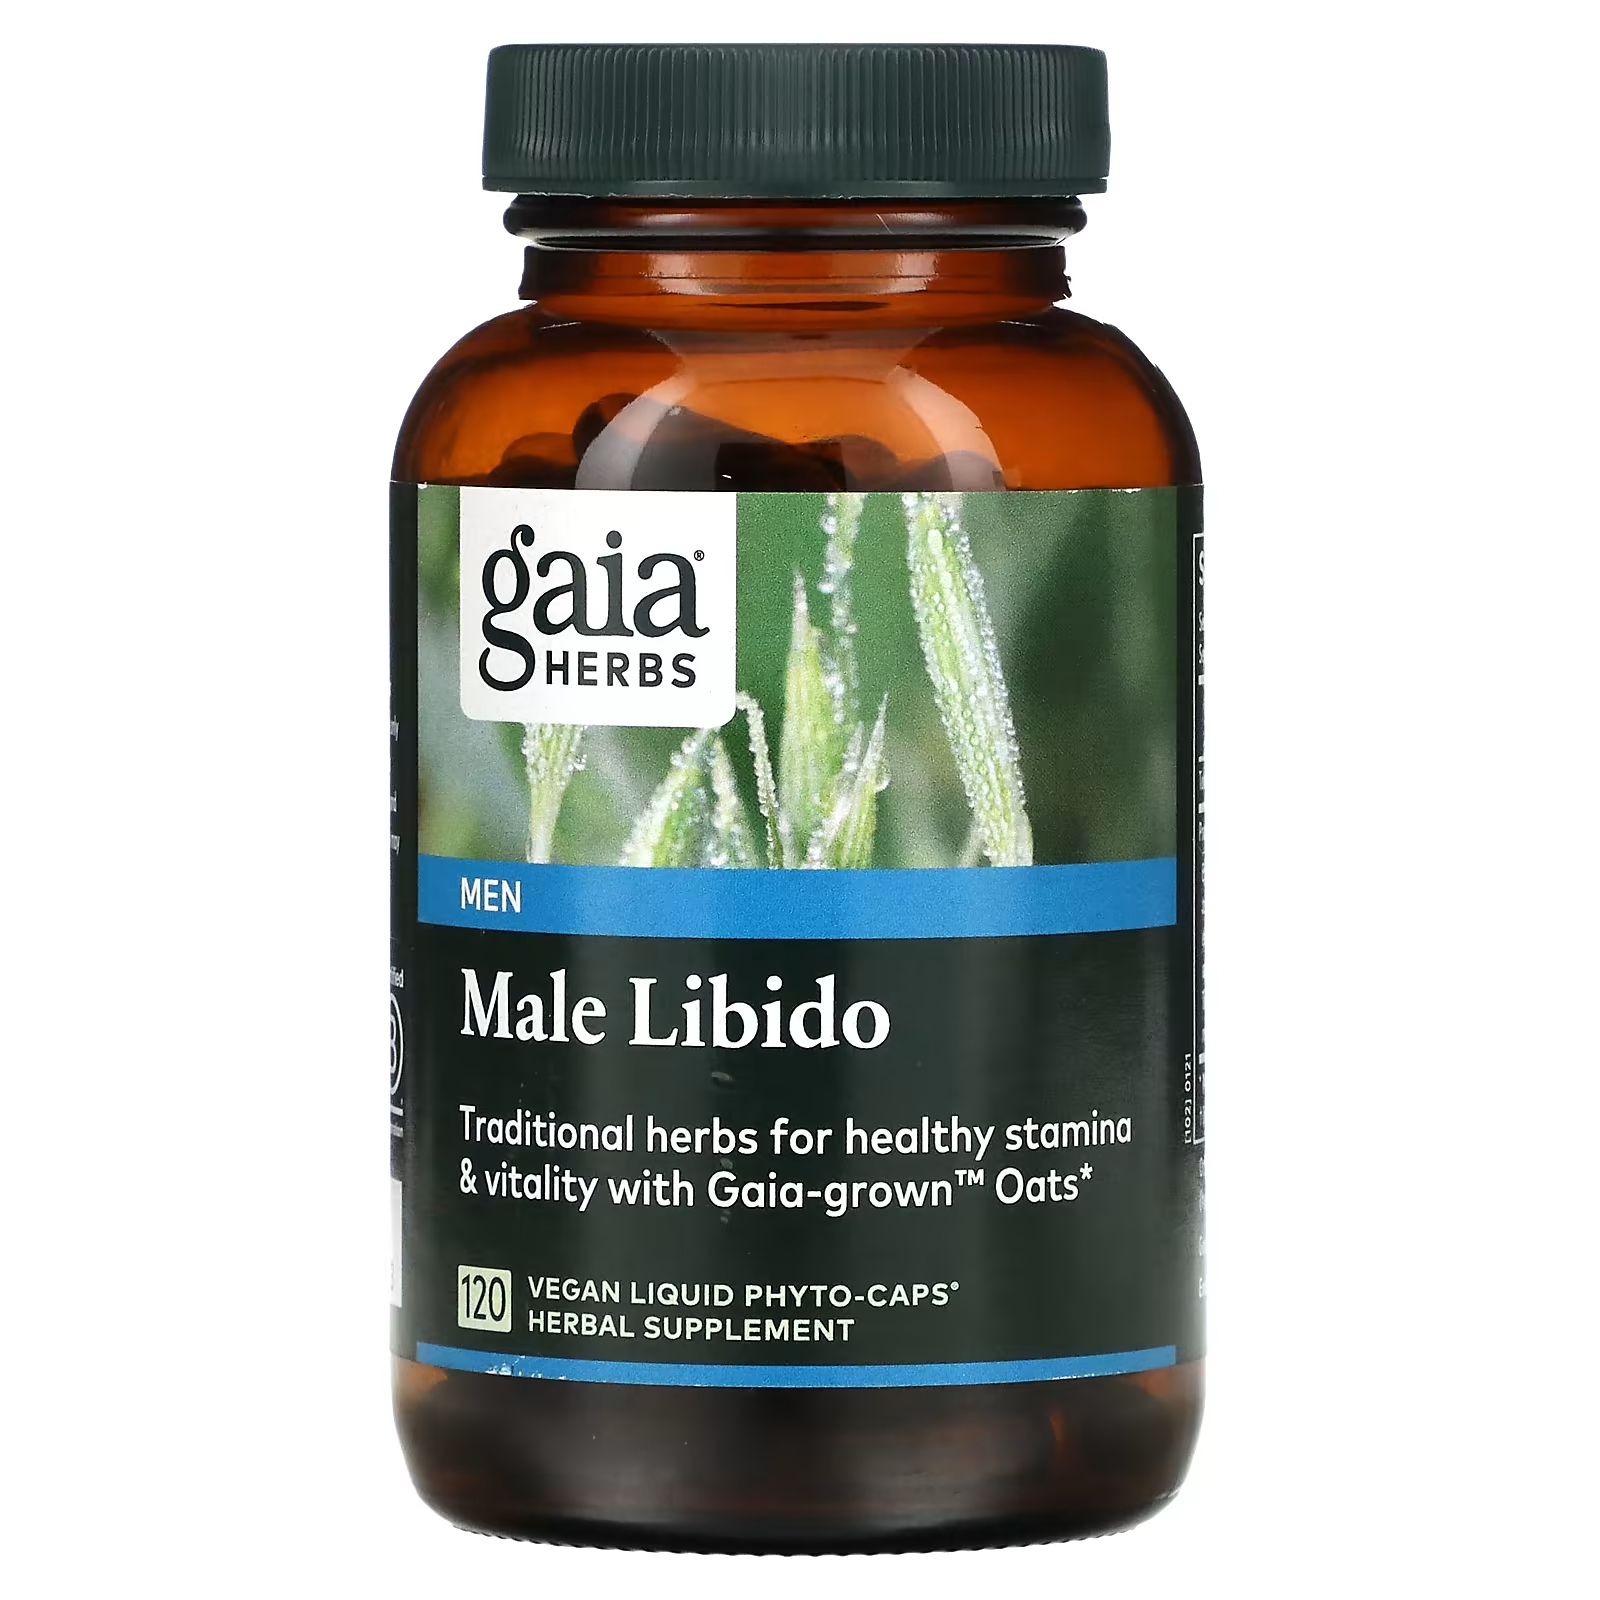 Травяная добавка Gaia Herbs Male Libido, 120 жидких фито-капсул